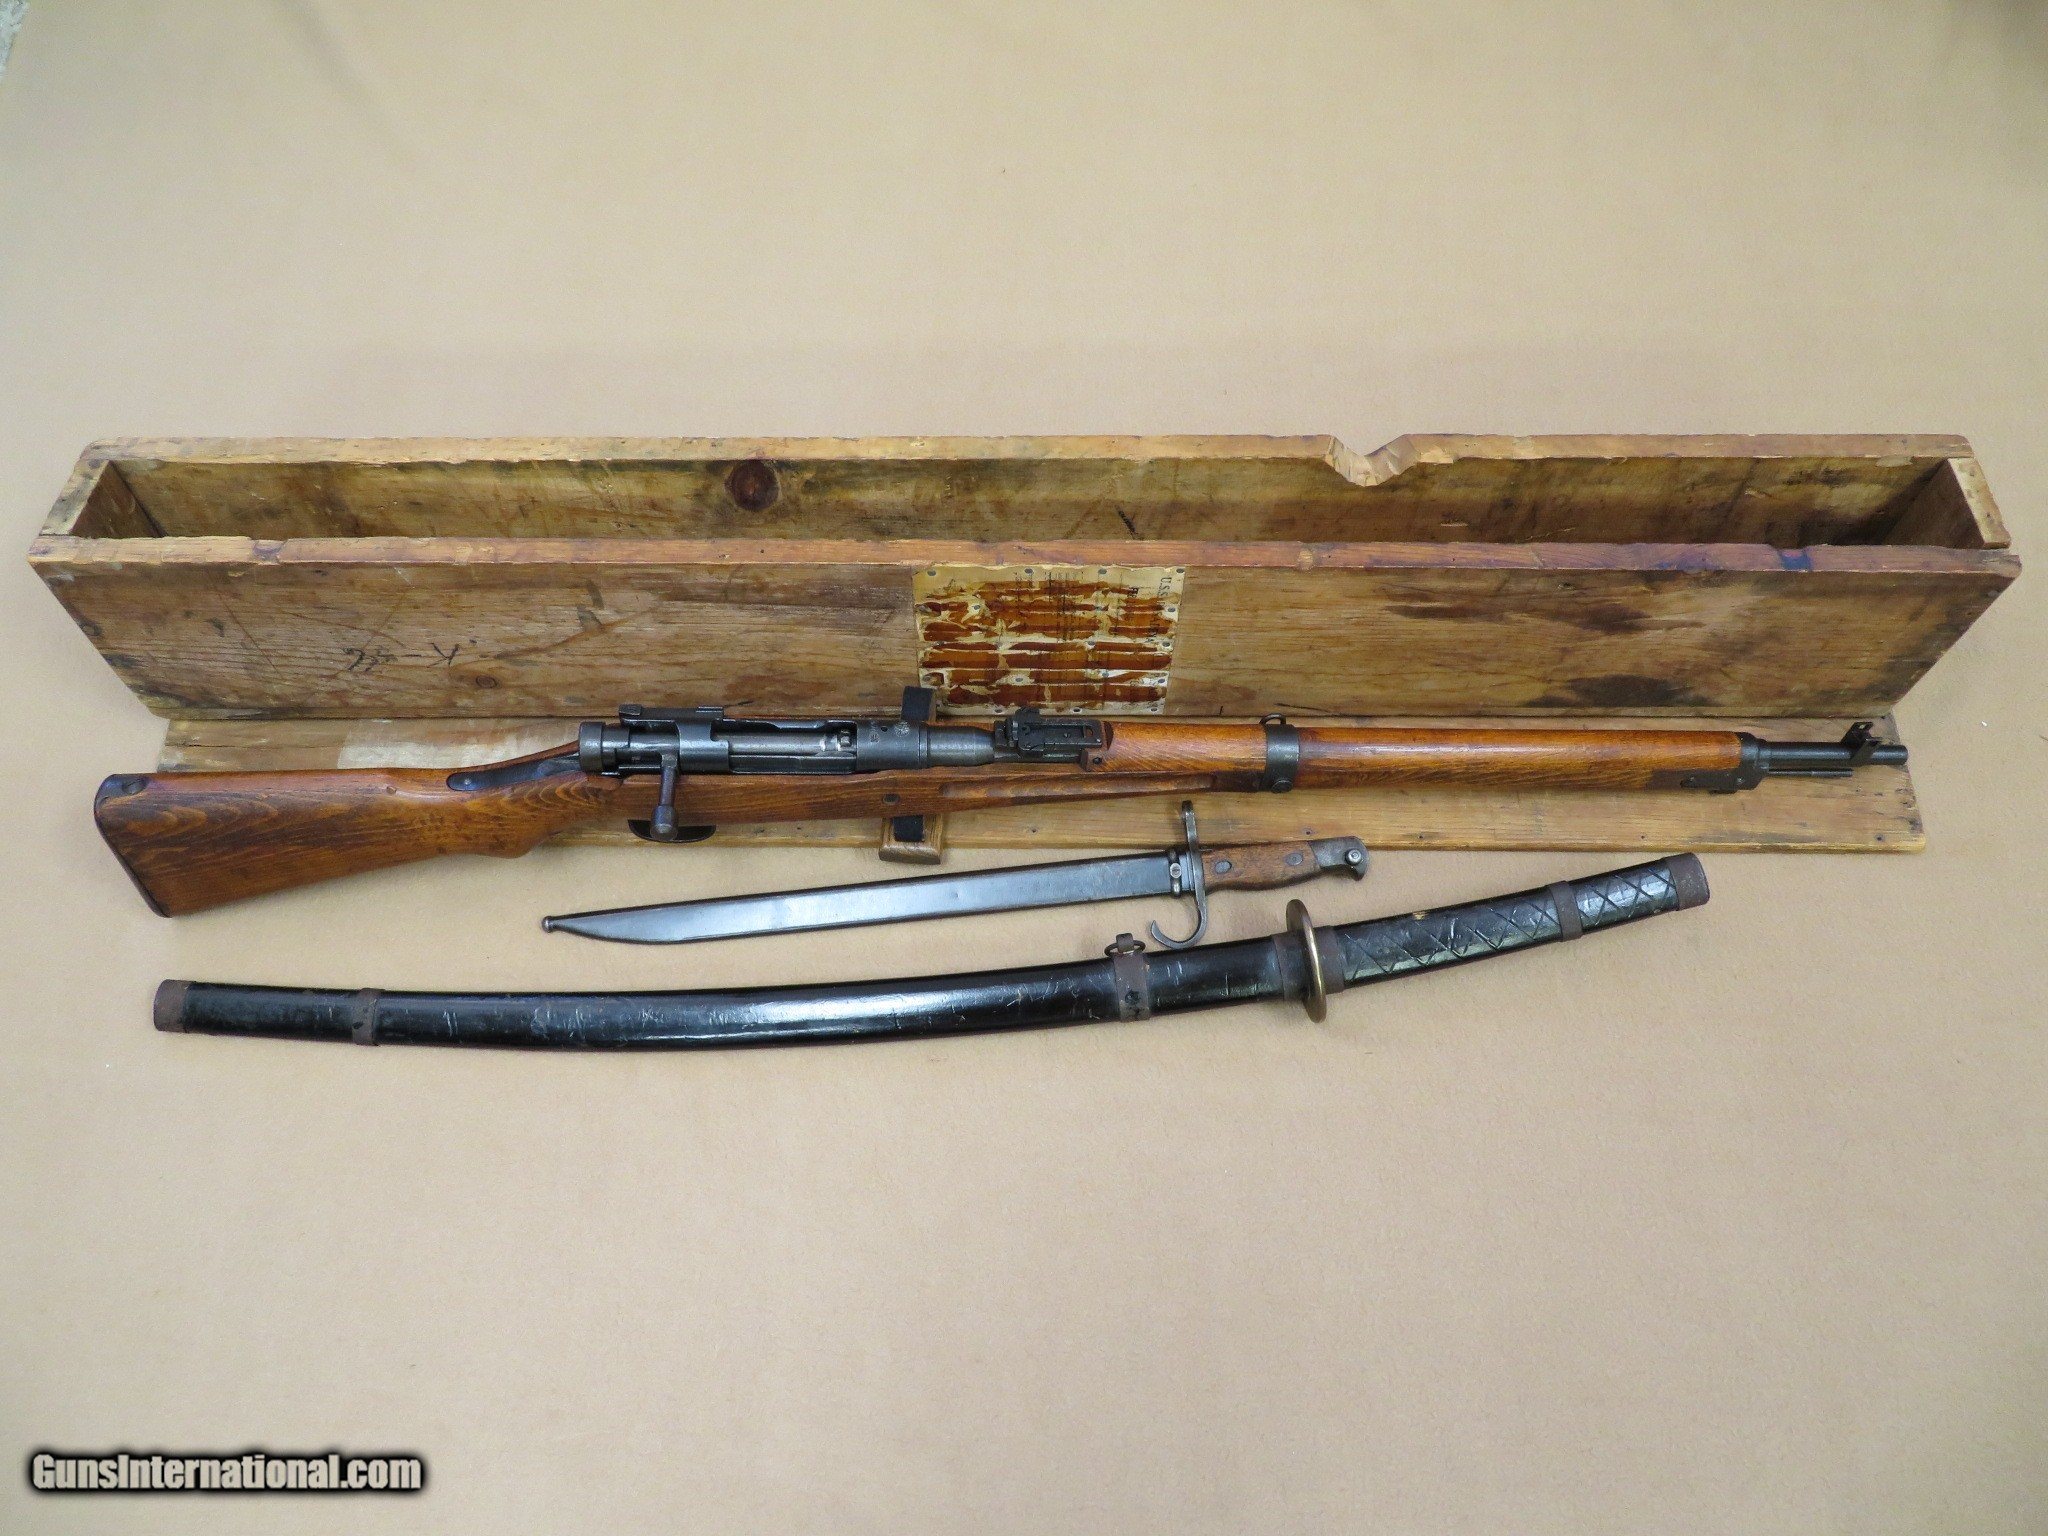 WW2-Jap-Type-99-Bayonet-and-Samaurai-Sword-in-Original-Shipping-Crate-w-Shipping-Tags-from-U-S-S-Pas_101186635_70986_BFC0E07470DB74AA.JPG